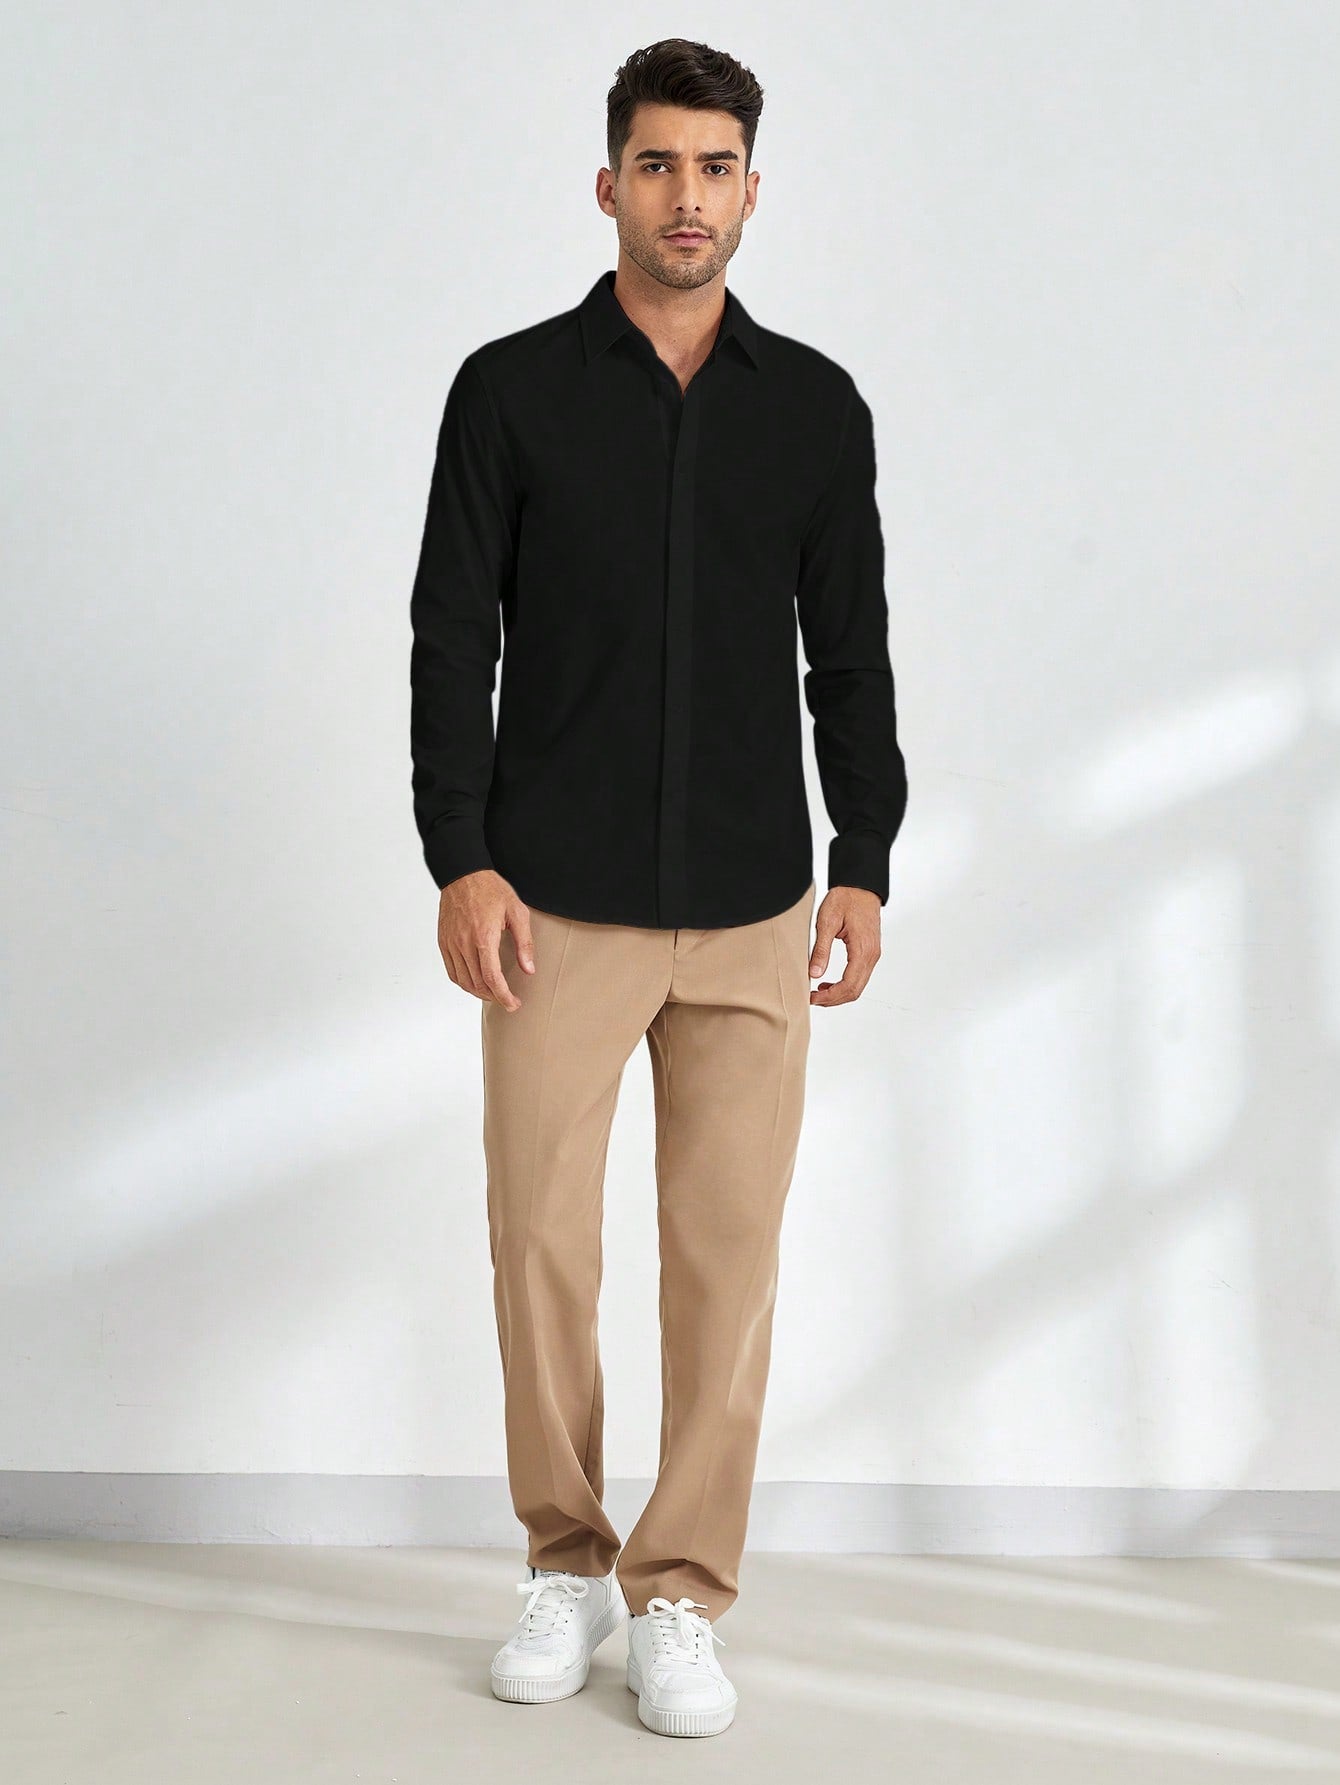 What pants matches a black shirt  Quora